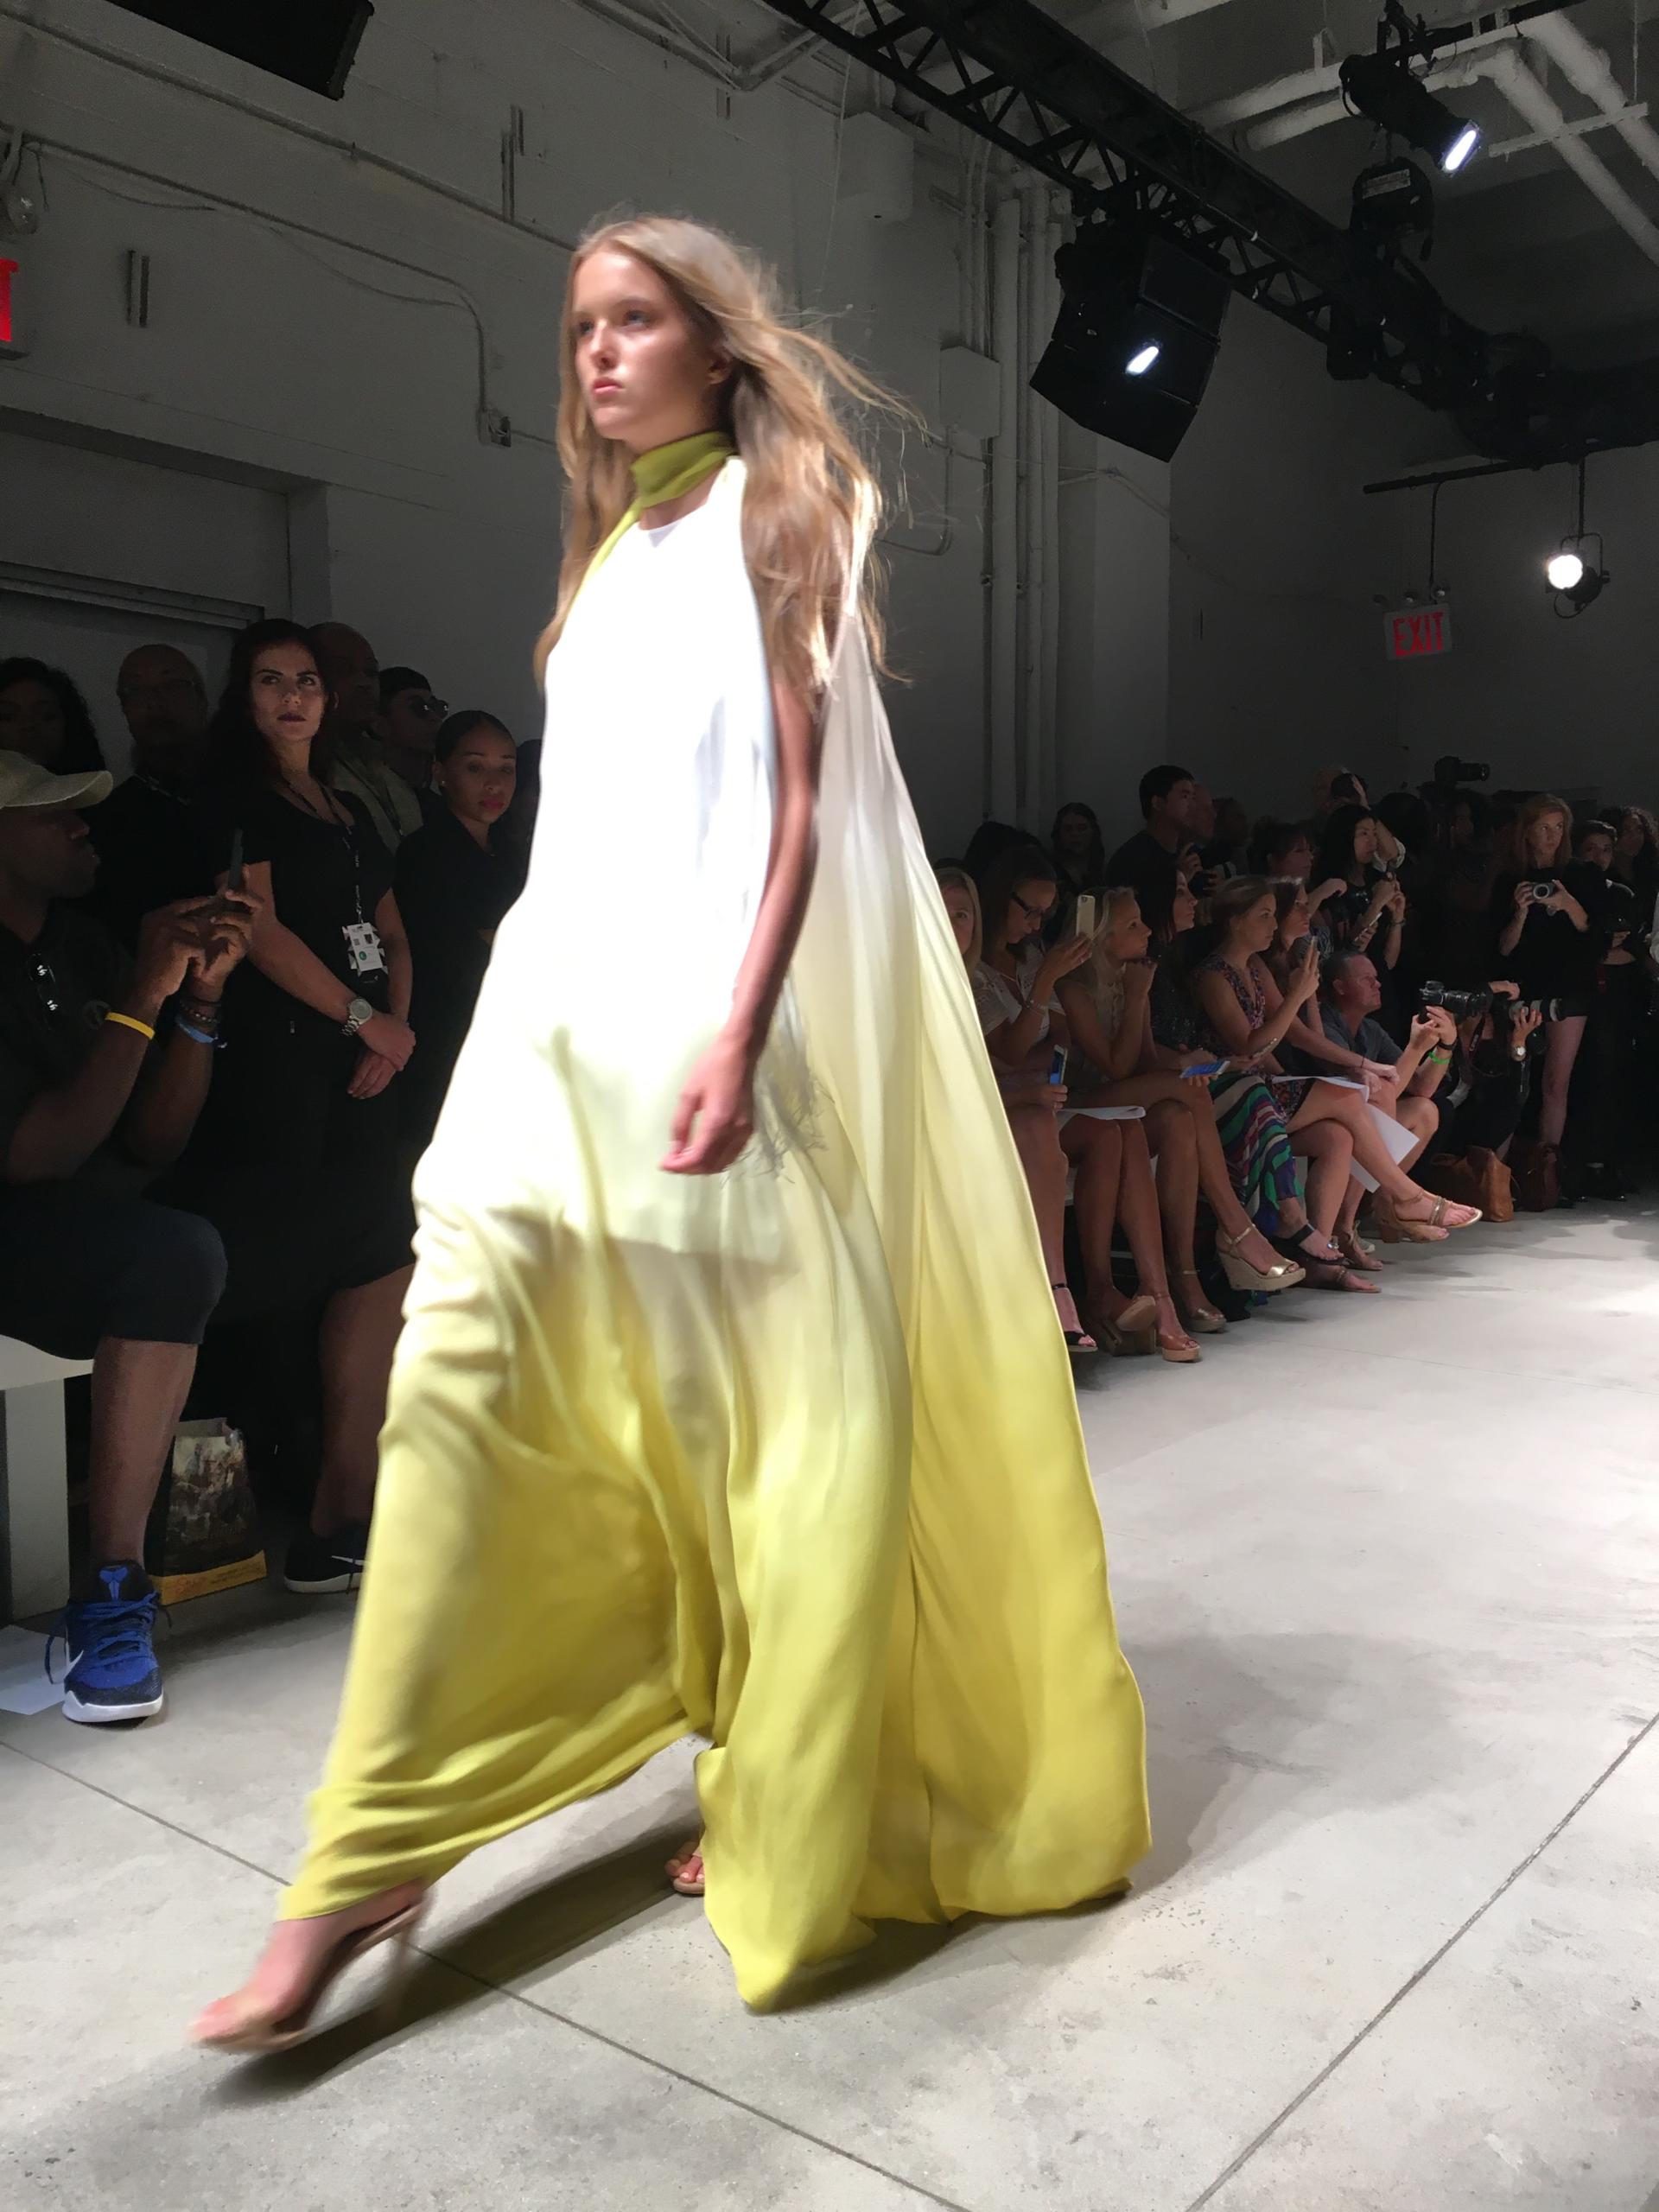 STYLE: New York Fashion Week, Part II